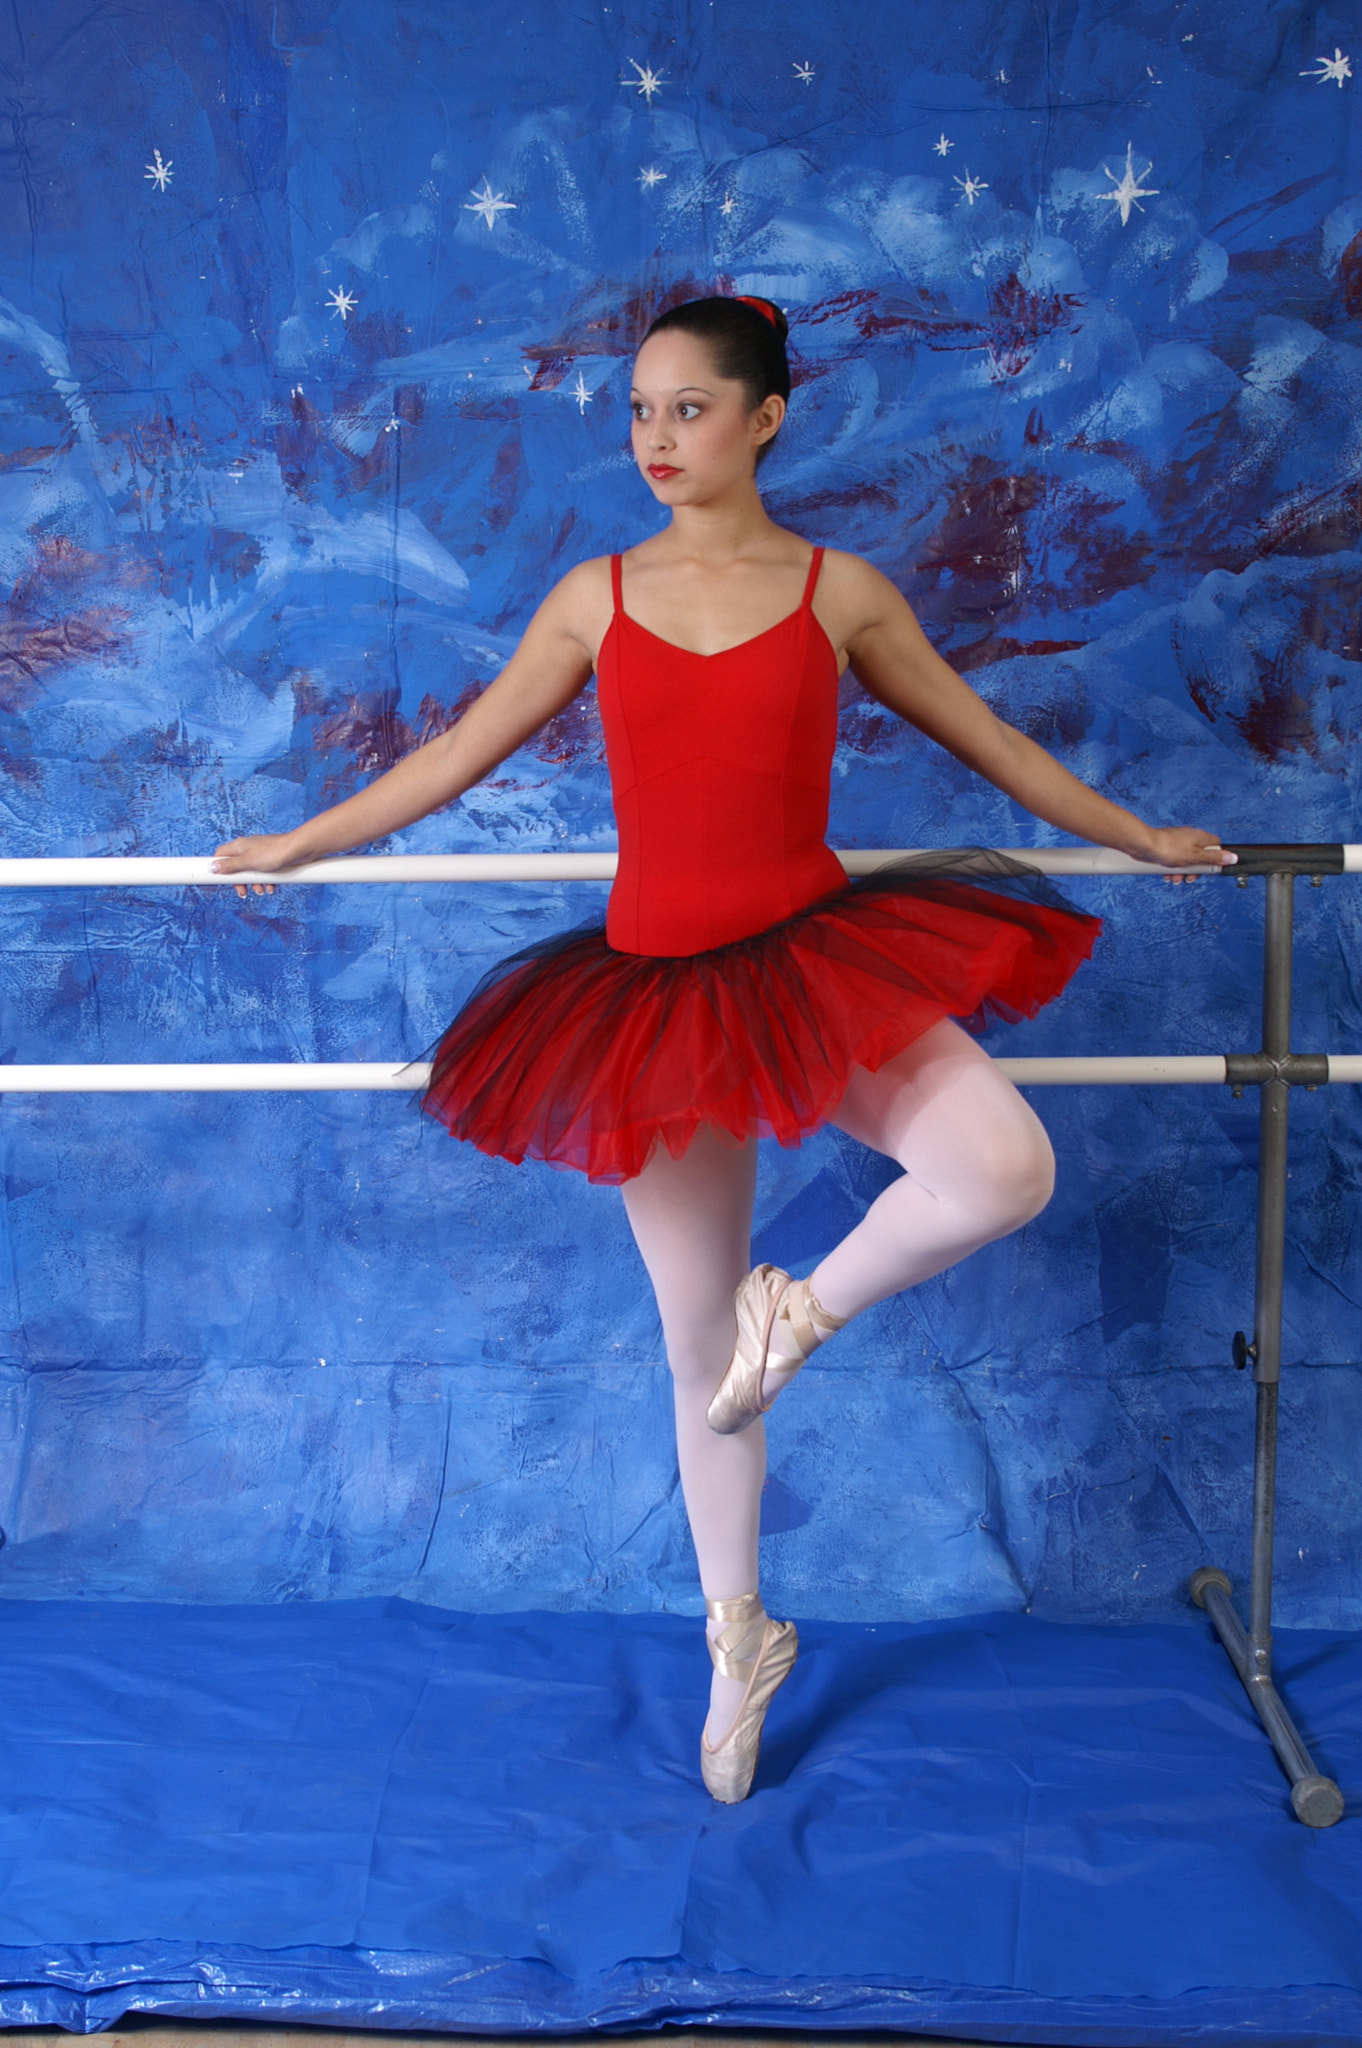 KONICA MINOLTA MAXXUM 7D + Sigma 18-200mm F3.5-6.3 DC sample photo. Ballet moves photography